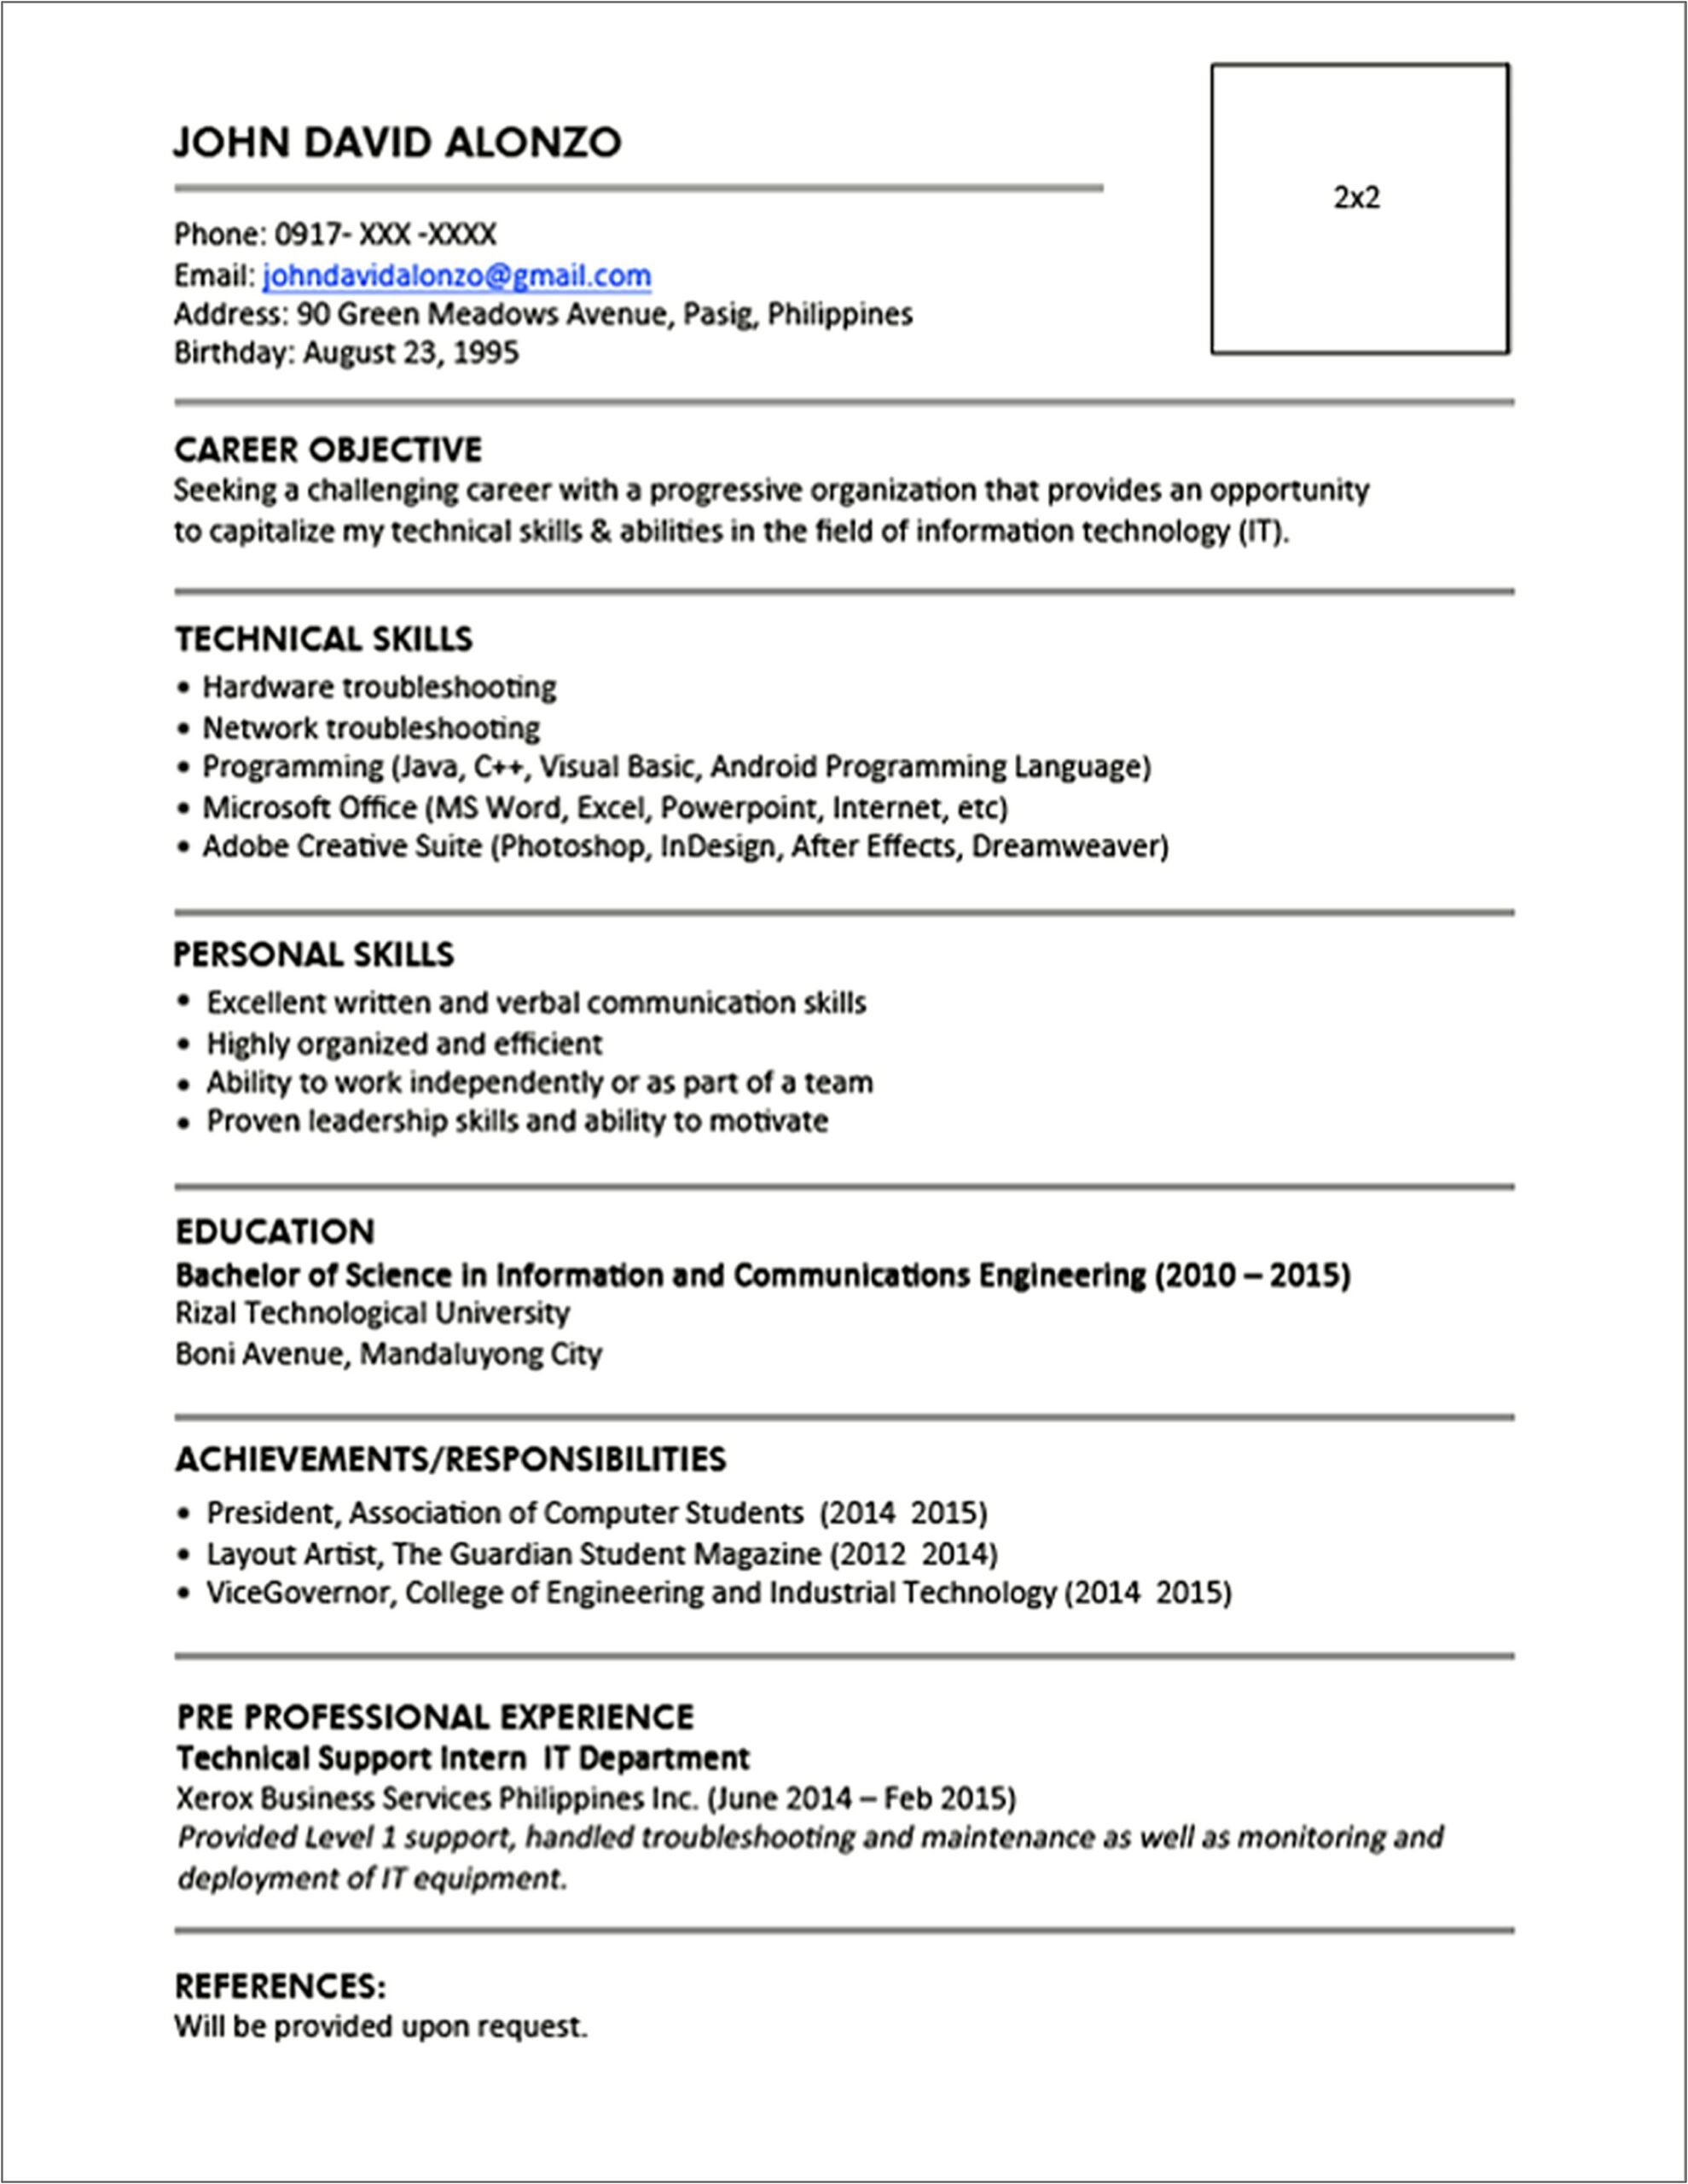 Resume For College Student Seeking Internship Sample